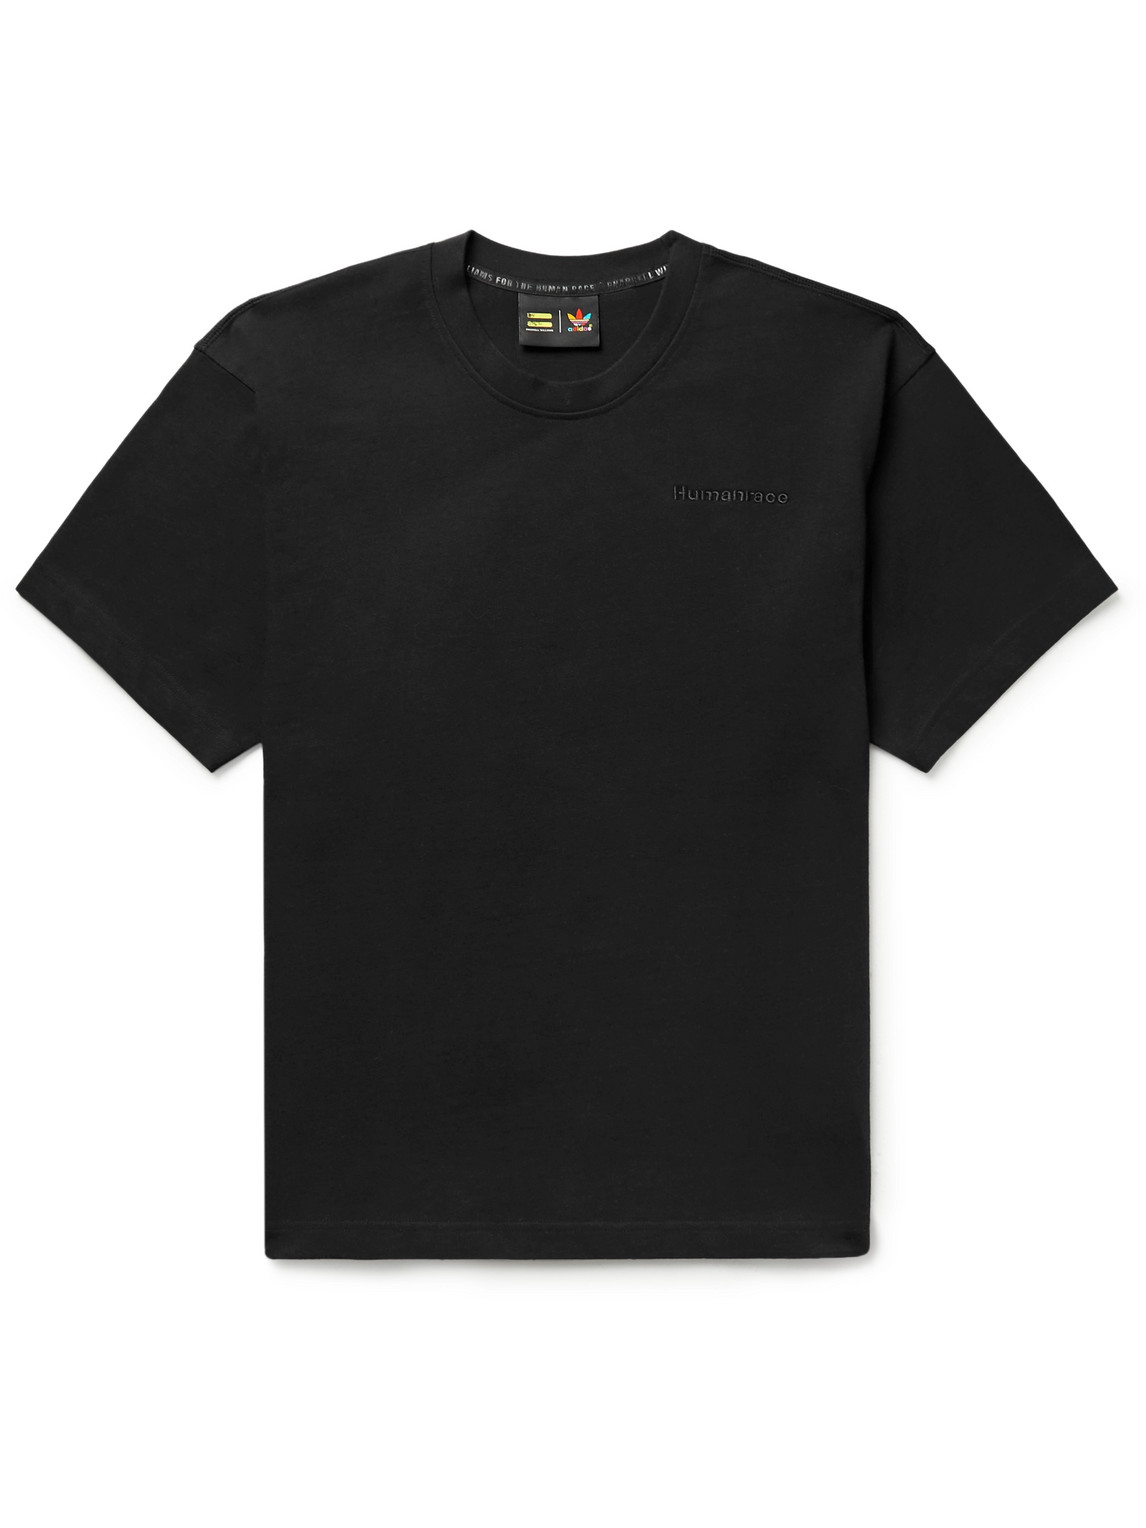 Adidas Consortium Pharrell Williams Basics Embroidered Cotton-jersey T-shirt In Black